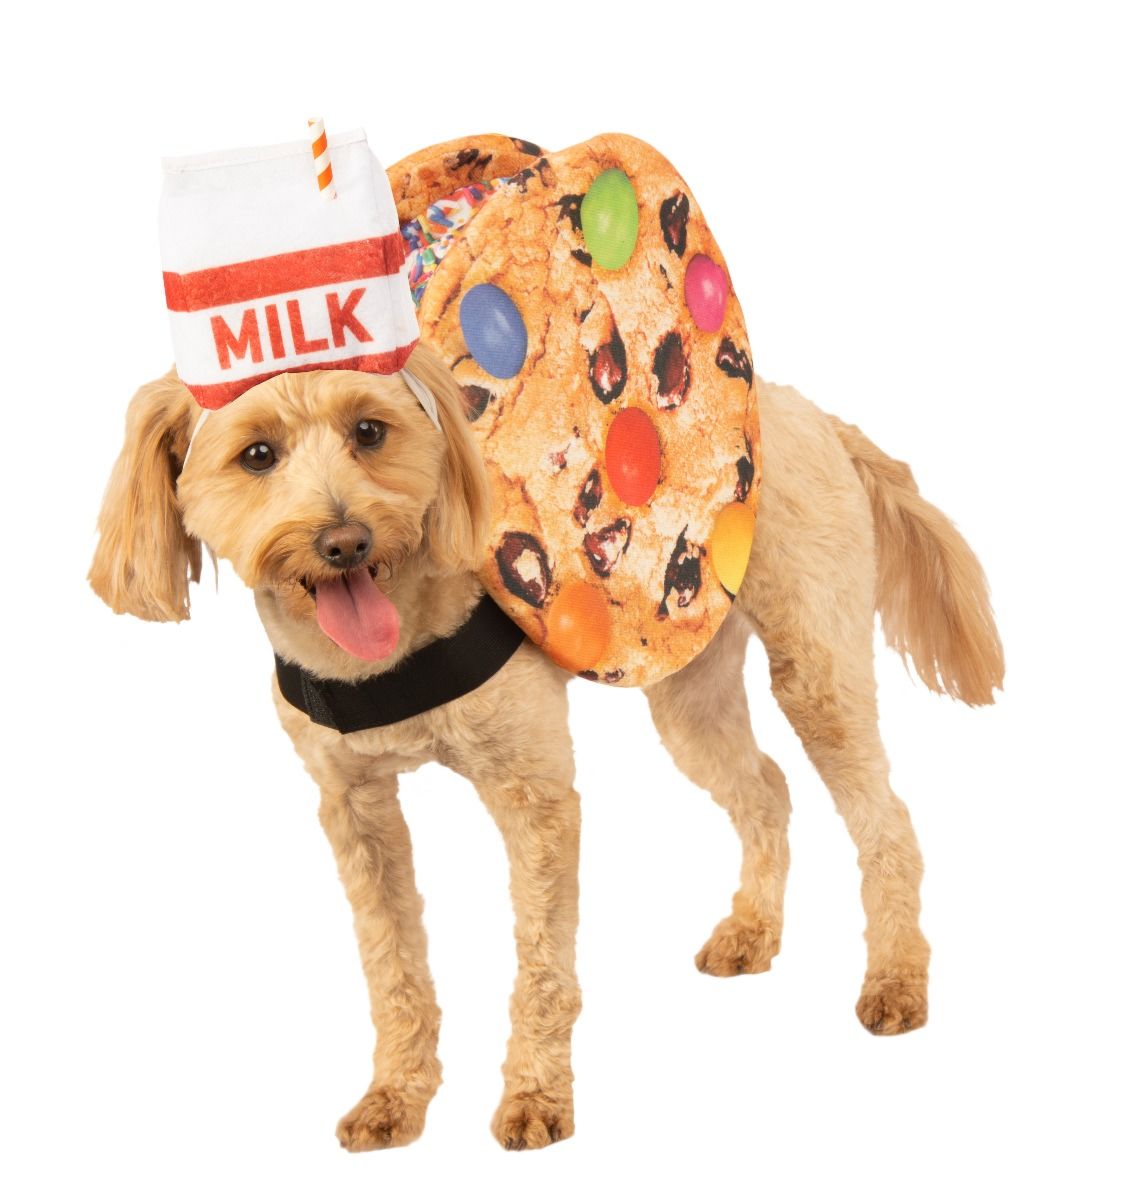 Cookies and Milk Pet Costume